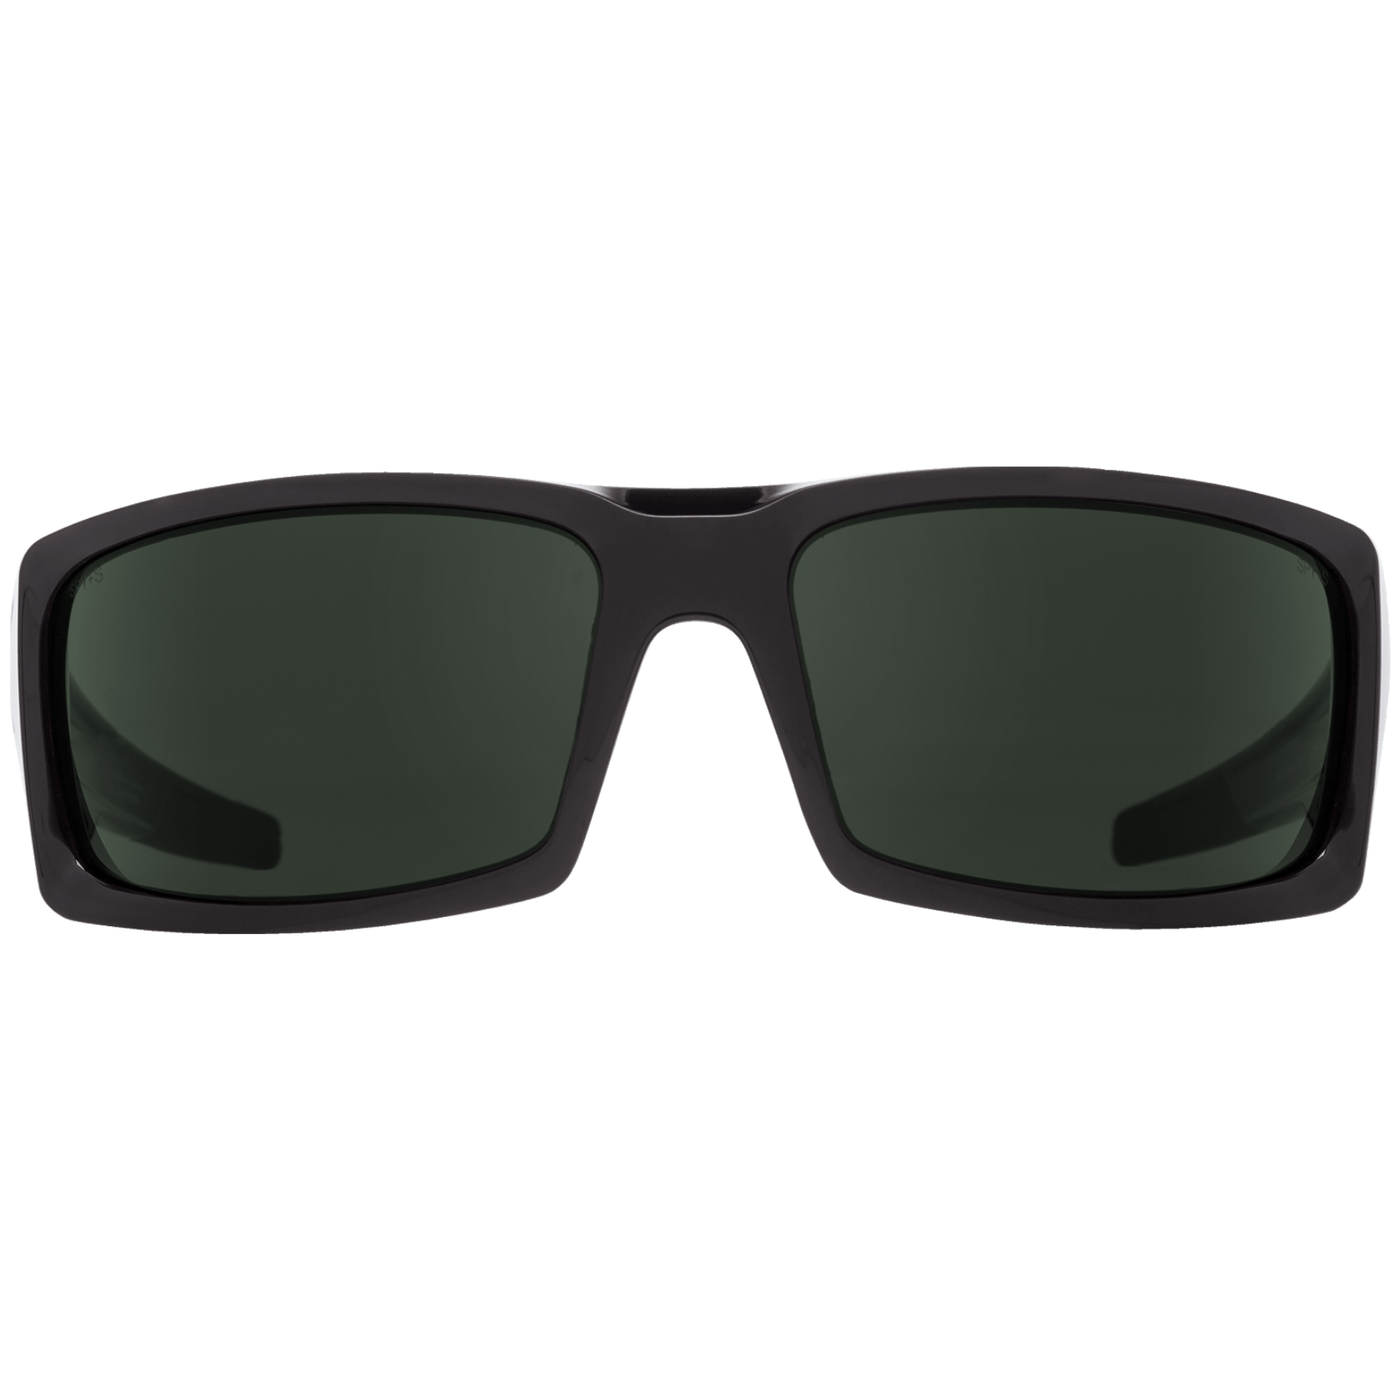 SPY GENERAL Sunglasses, ANSI Z87.1 - SOSI Black 8Lines Shop - Fast Shipping